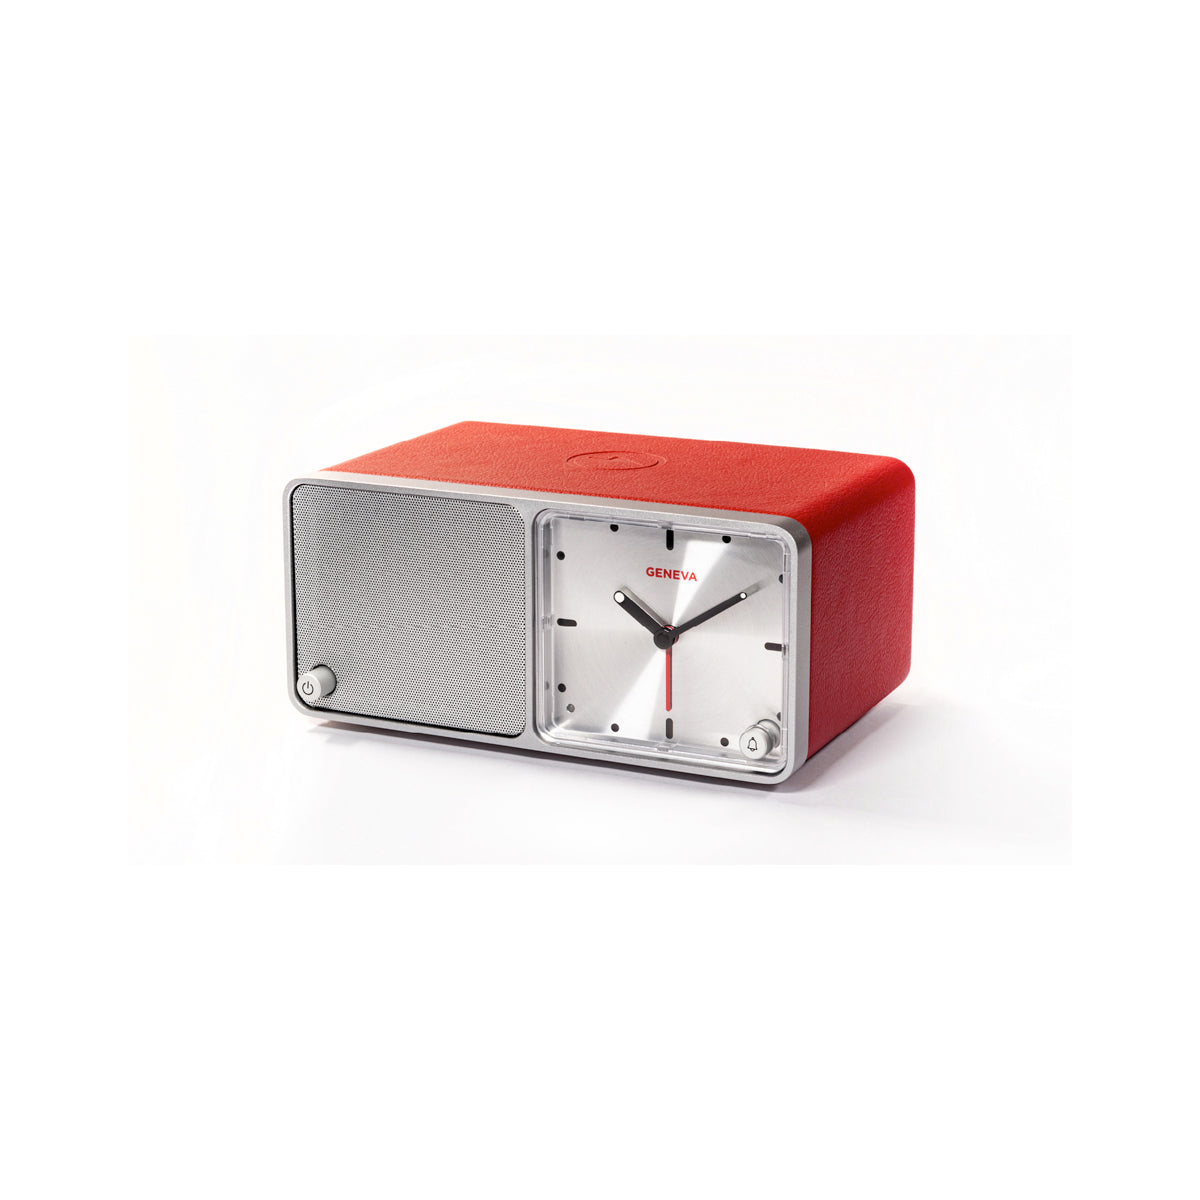 Geneva TIME Bluetooth speaker and clock - The Audio Experts